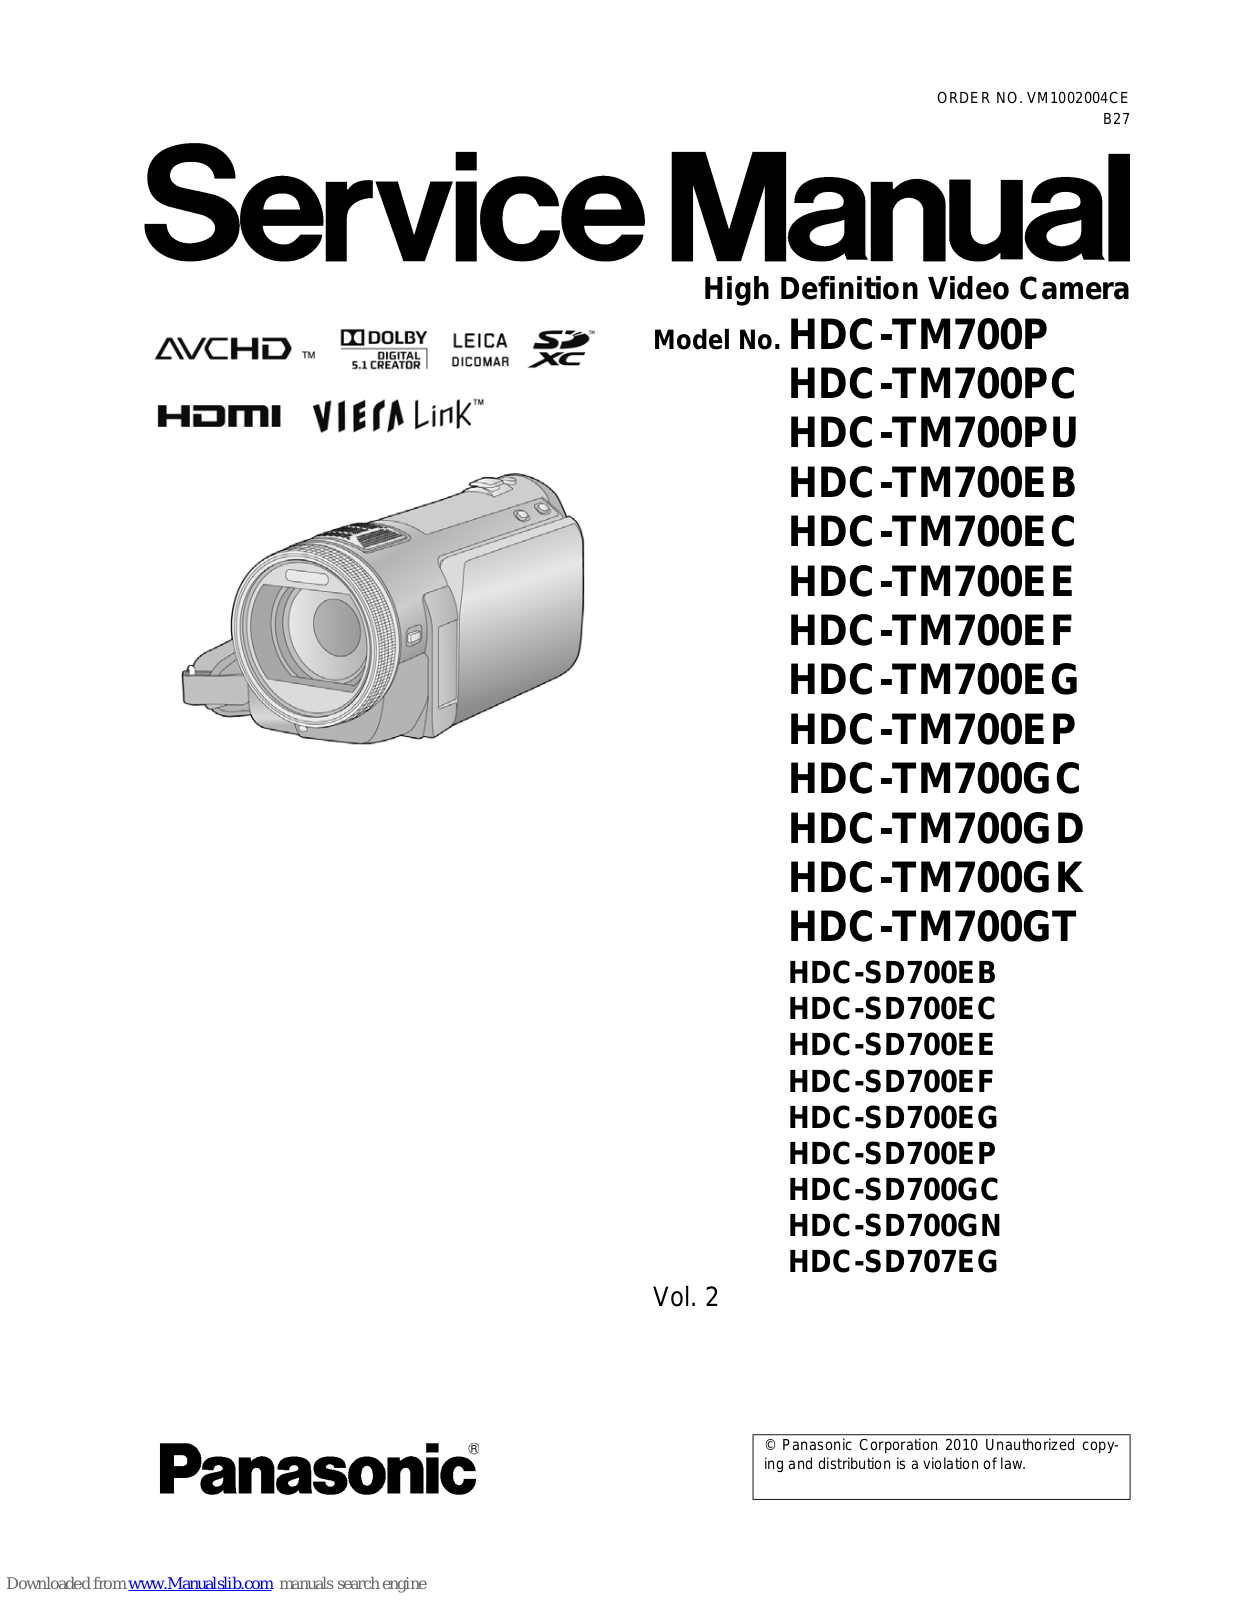 Panasonic HDC-TM700EC, HDC-TM700PU, HDC-TM700EE, HDC-TM700EF, HDC-TM700EG Service Manual